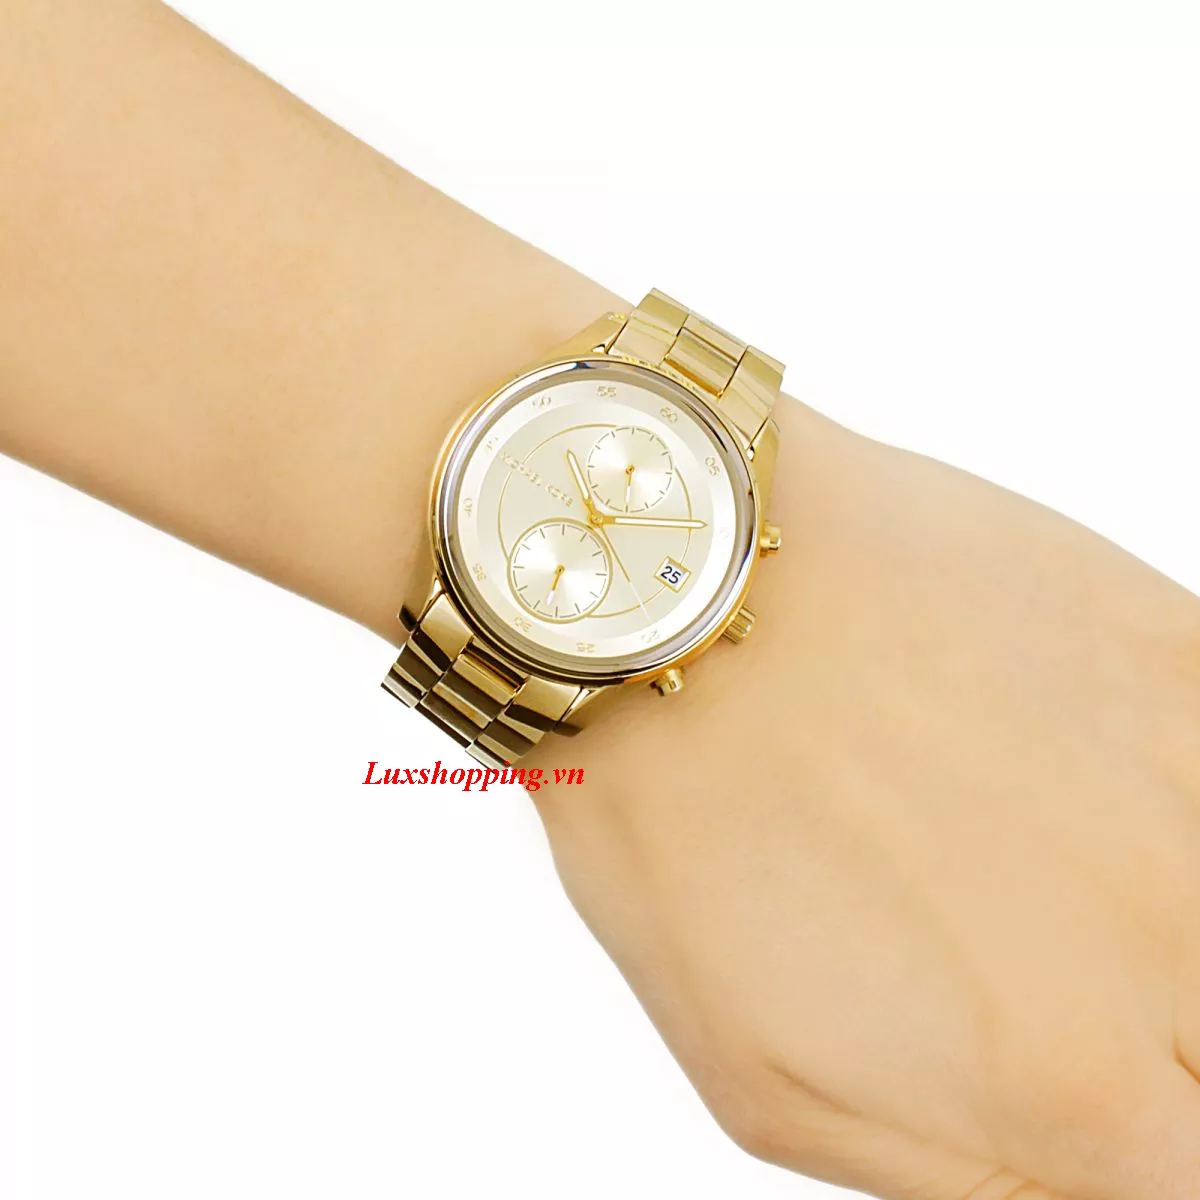 Michael Kors Briar Gold-Tone Watch 40mm